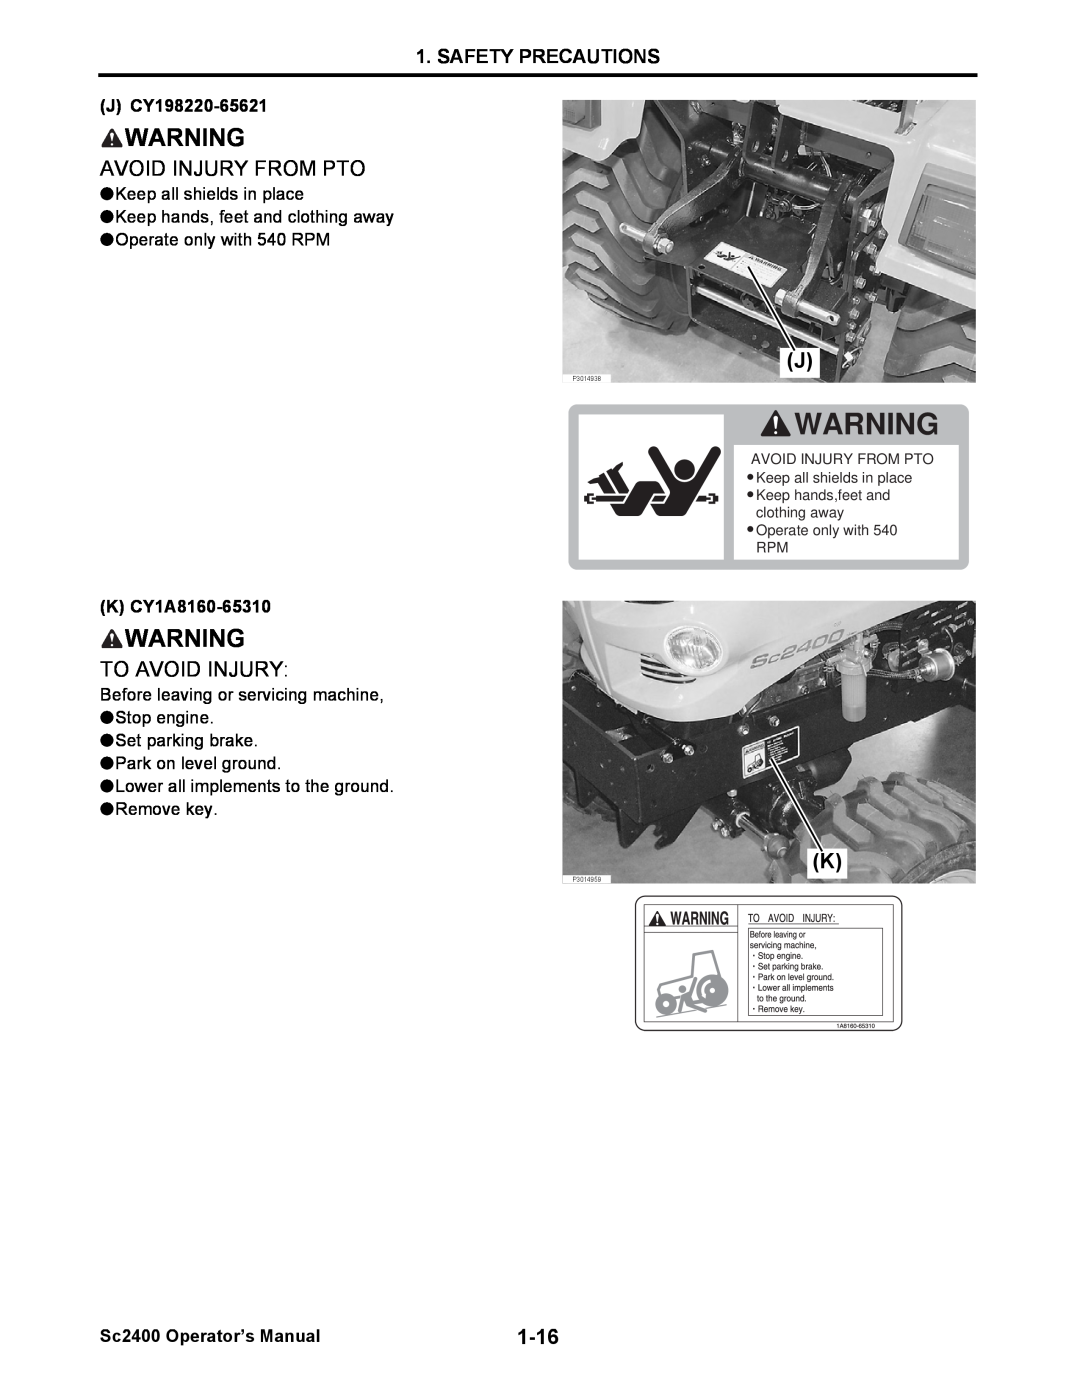 Cub Cadet SC2400 manual Avoid Injury From Pto, To Avoid Injury, Safety Precautions, JCY198220-65621, KCY1A8160-65310 